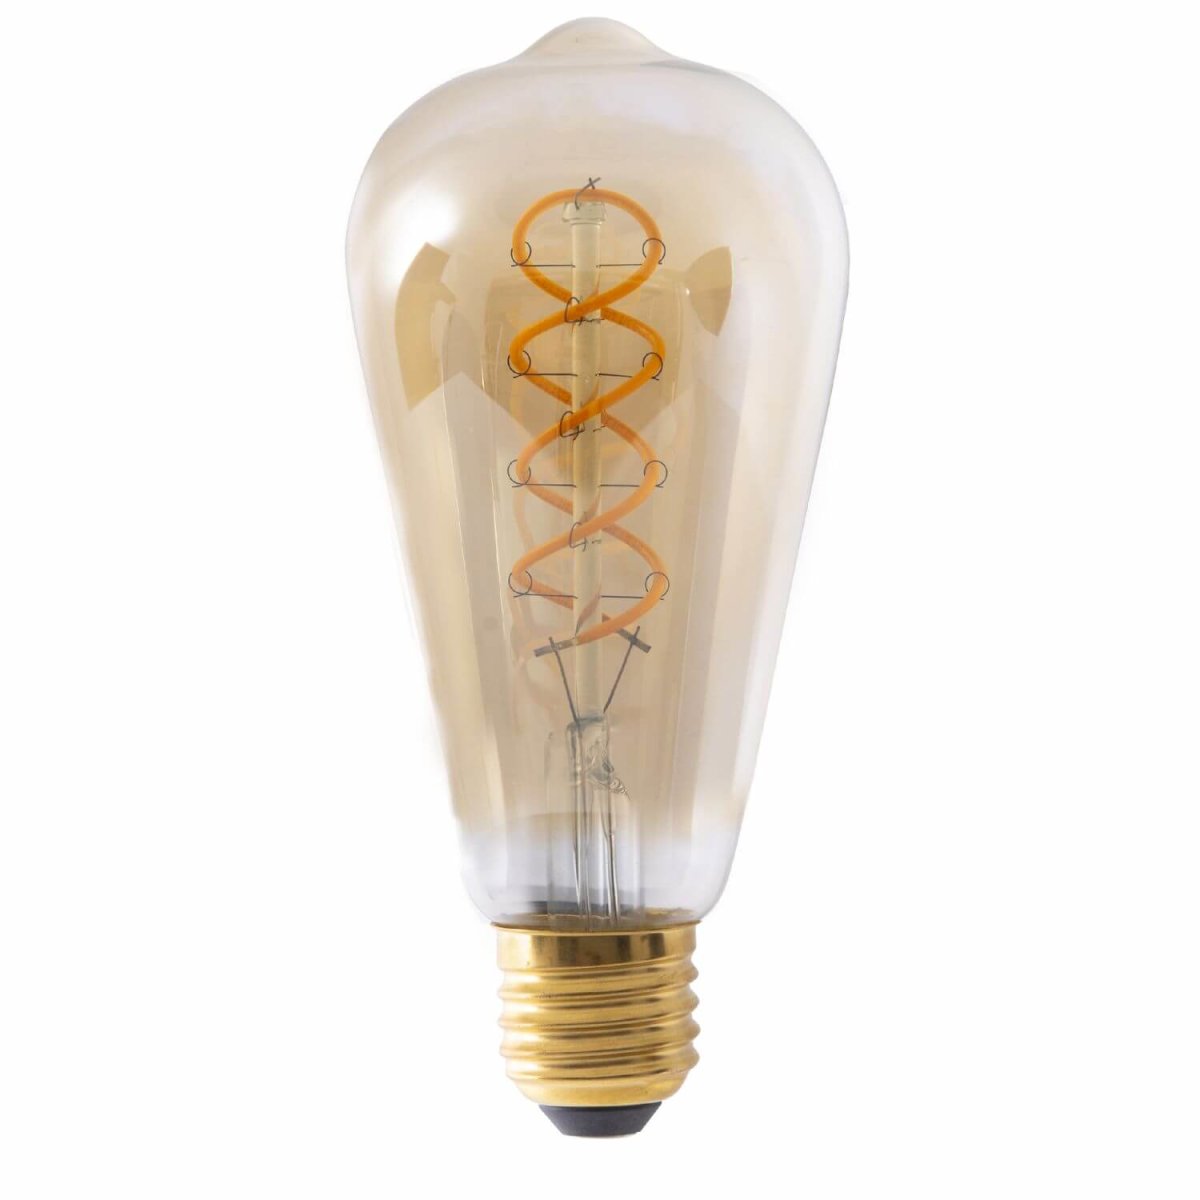 Näve 3er-Set LED Leuchtmittel DILLY 5W Warmweiss amber 4135 6,4x6,4cm